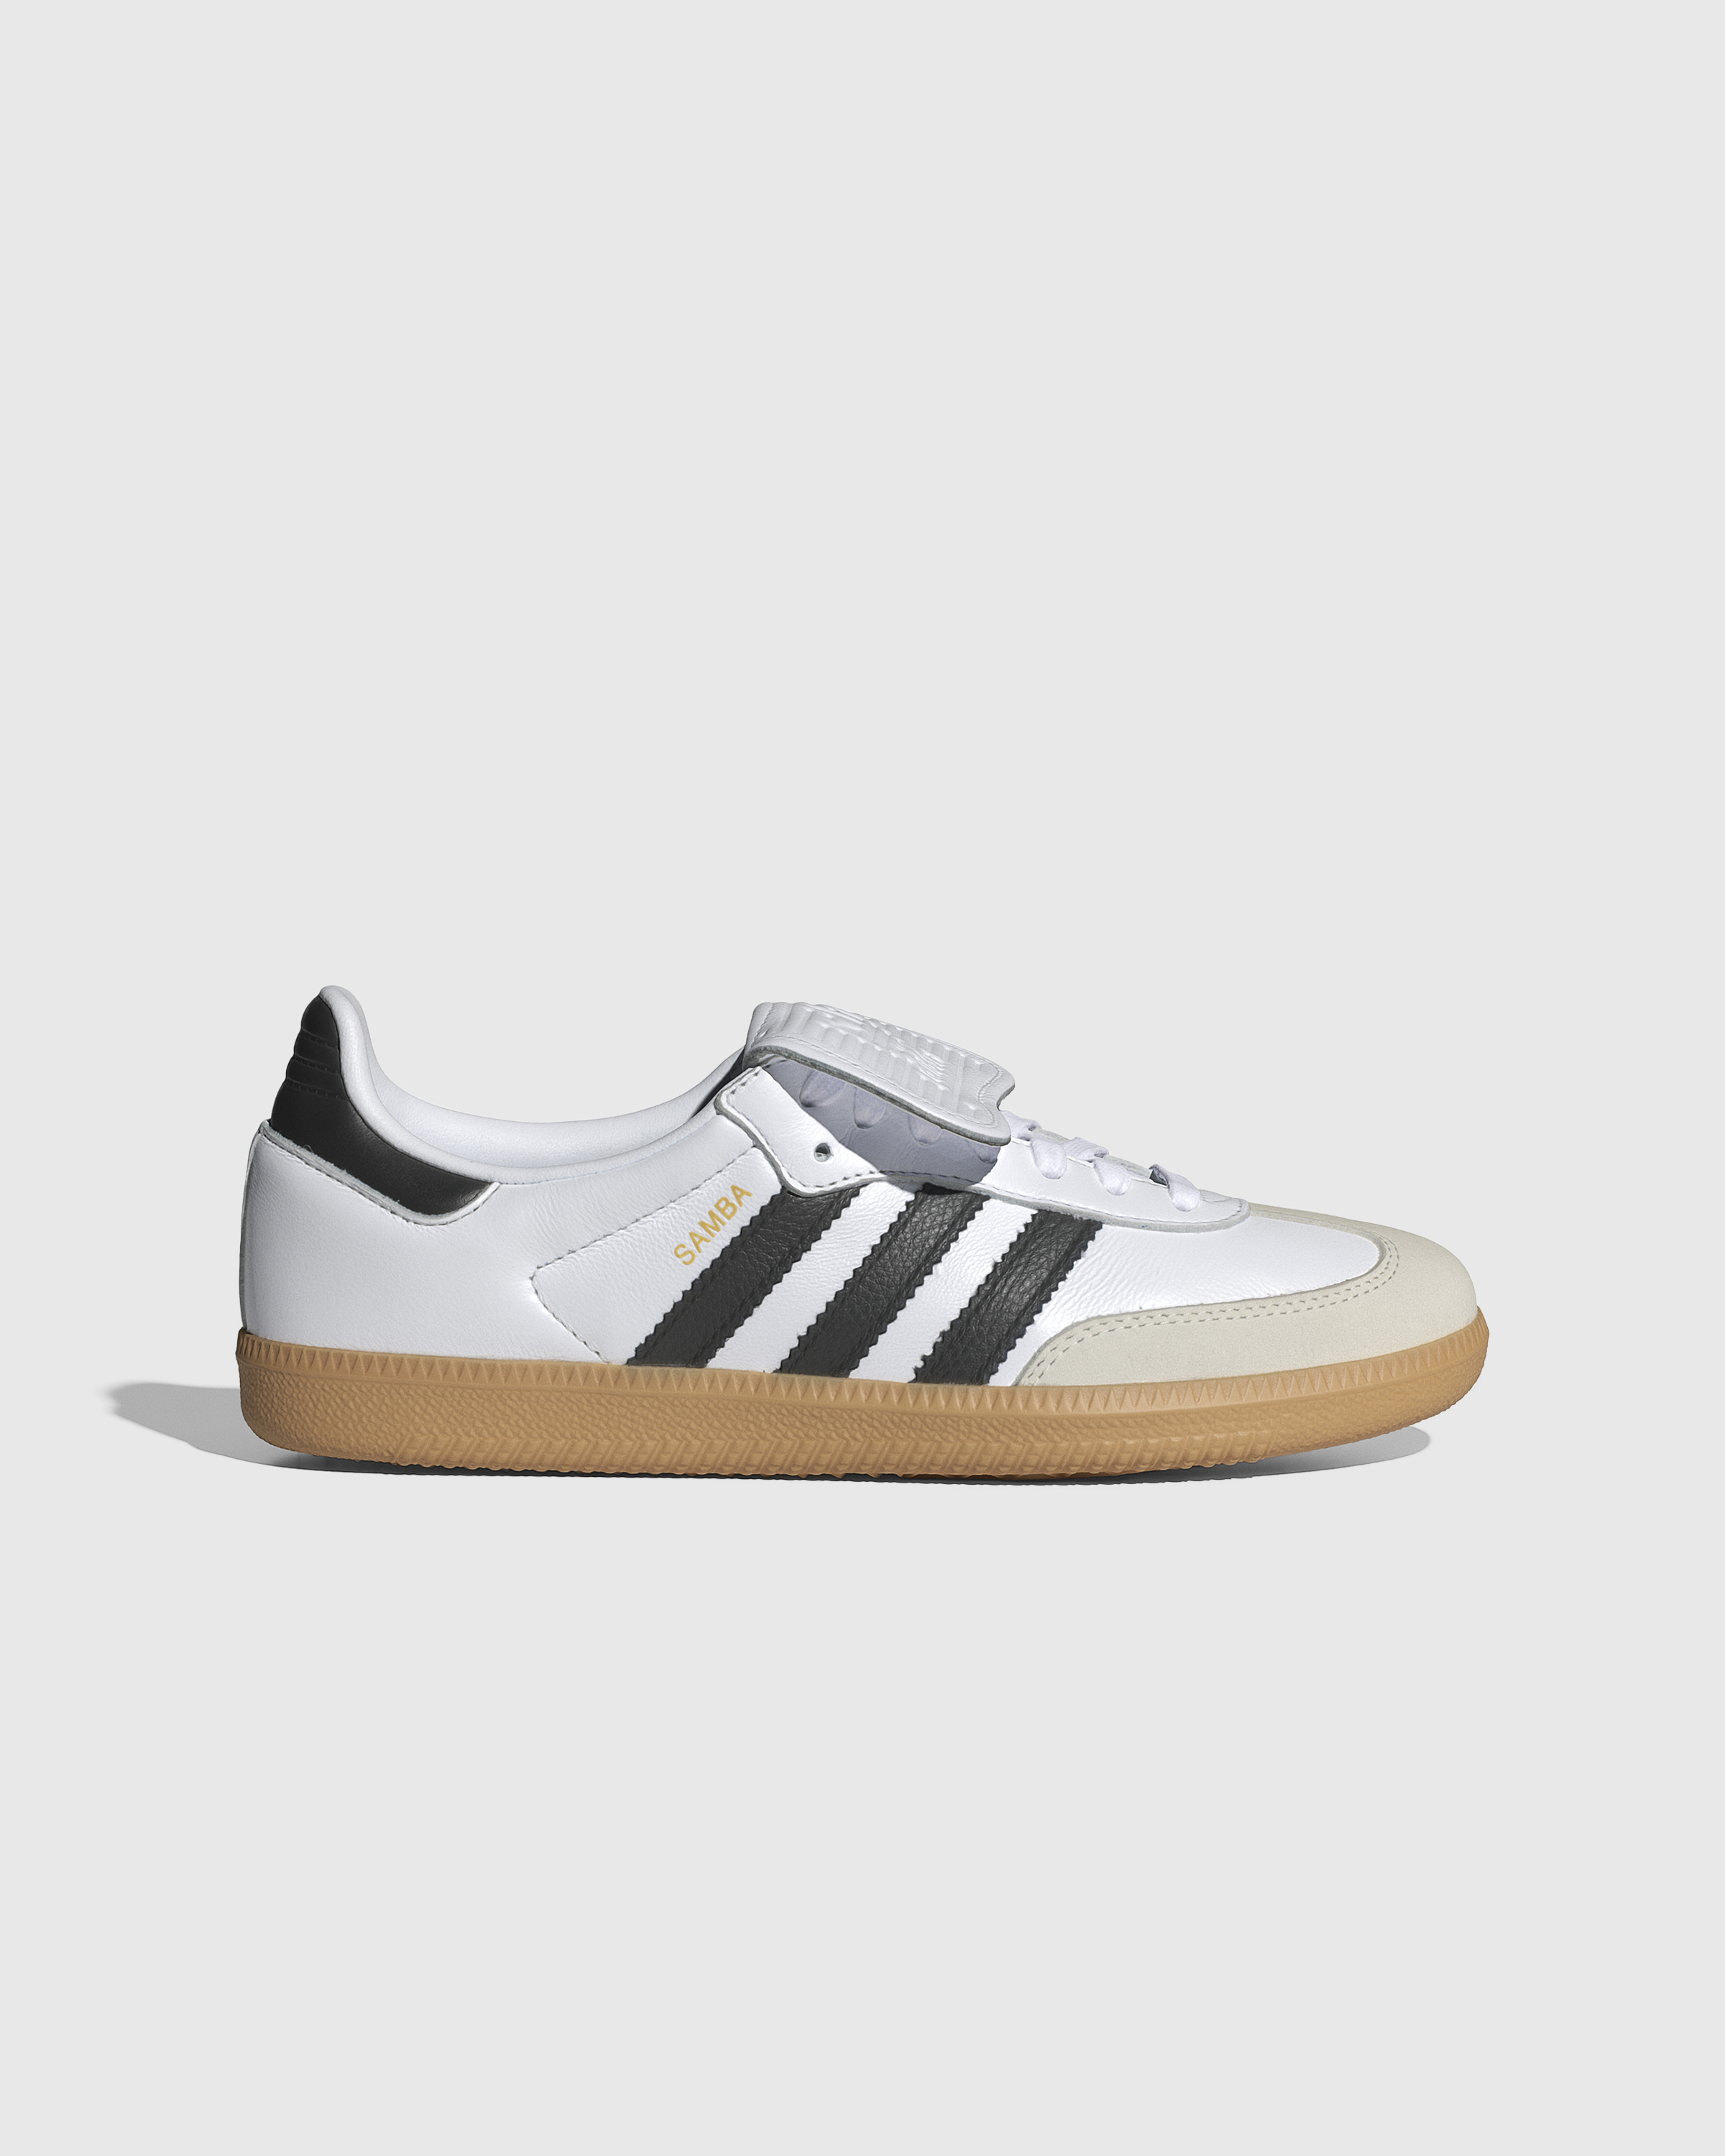 Adidas – Samba LT W White/Black/Gold - Low Top Sneakers - White - Image 1